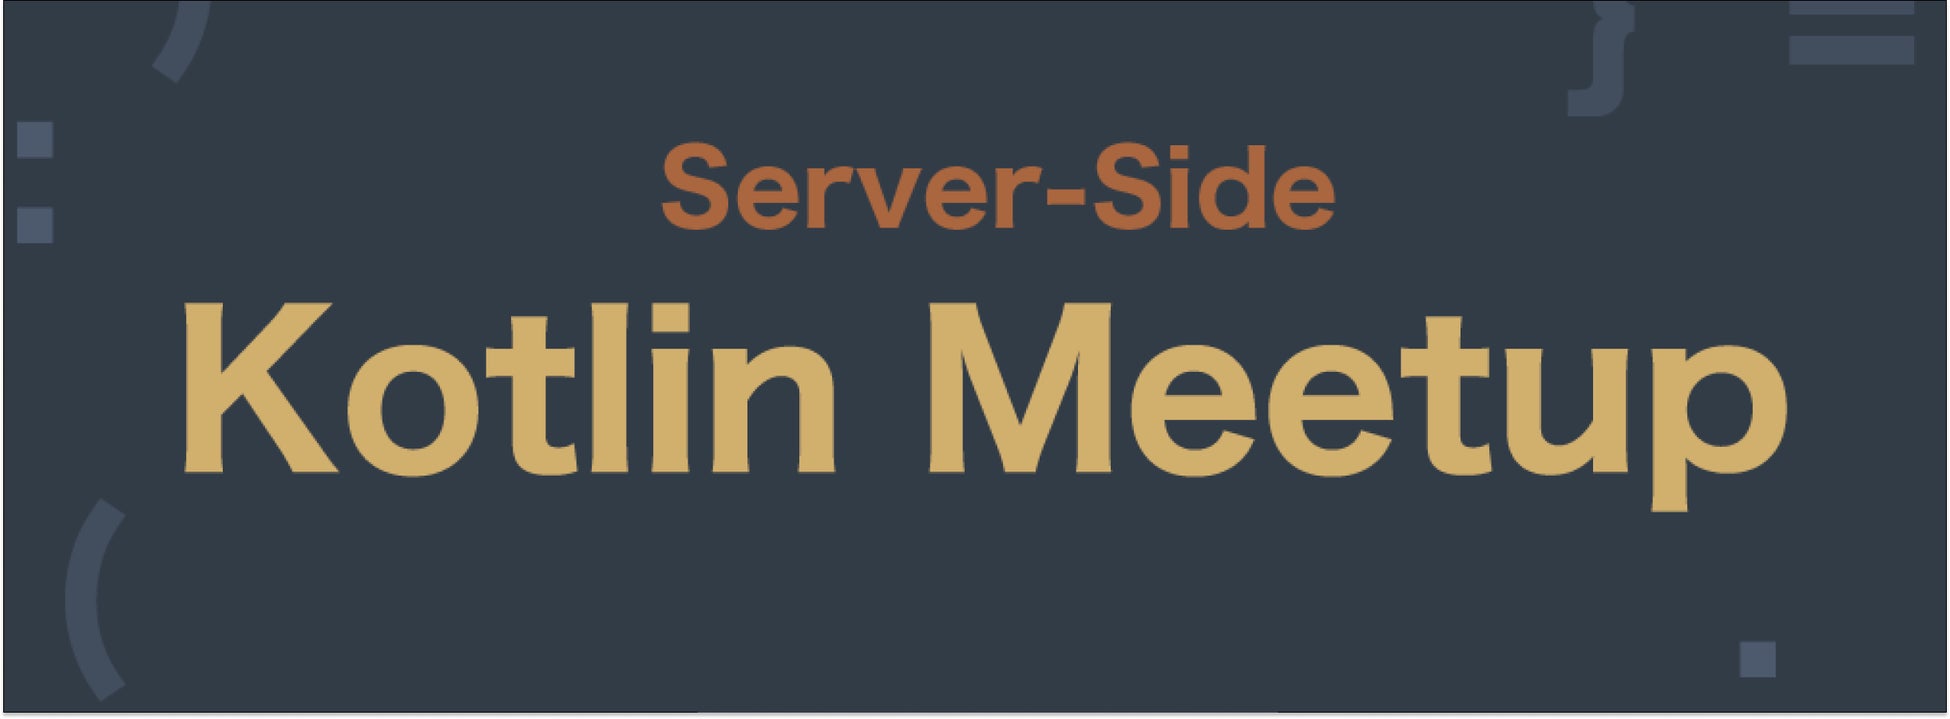 UPSIDERの水村が、「Server-Side Kotlin Meetup」に登壇します #serverside_kotlin_meetup